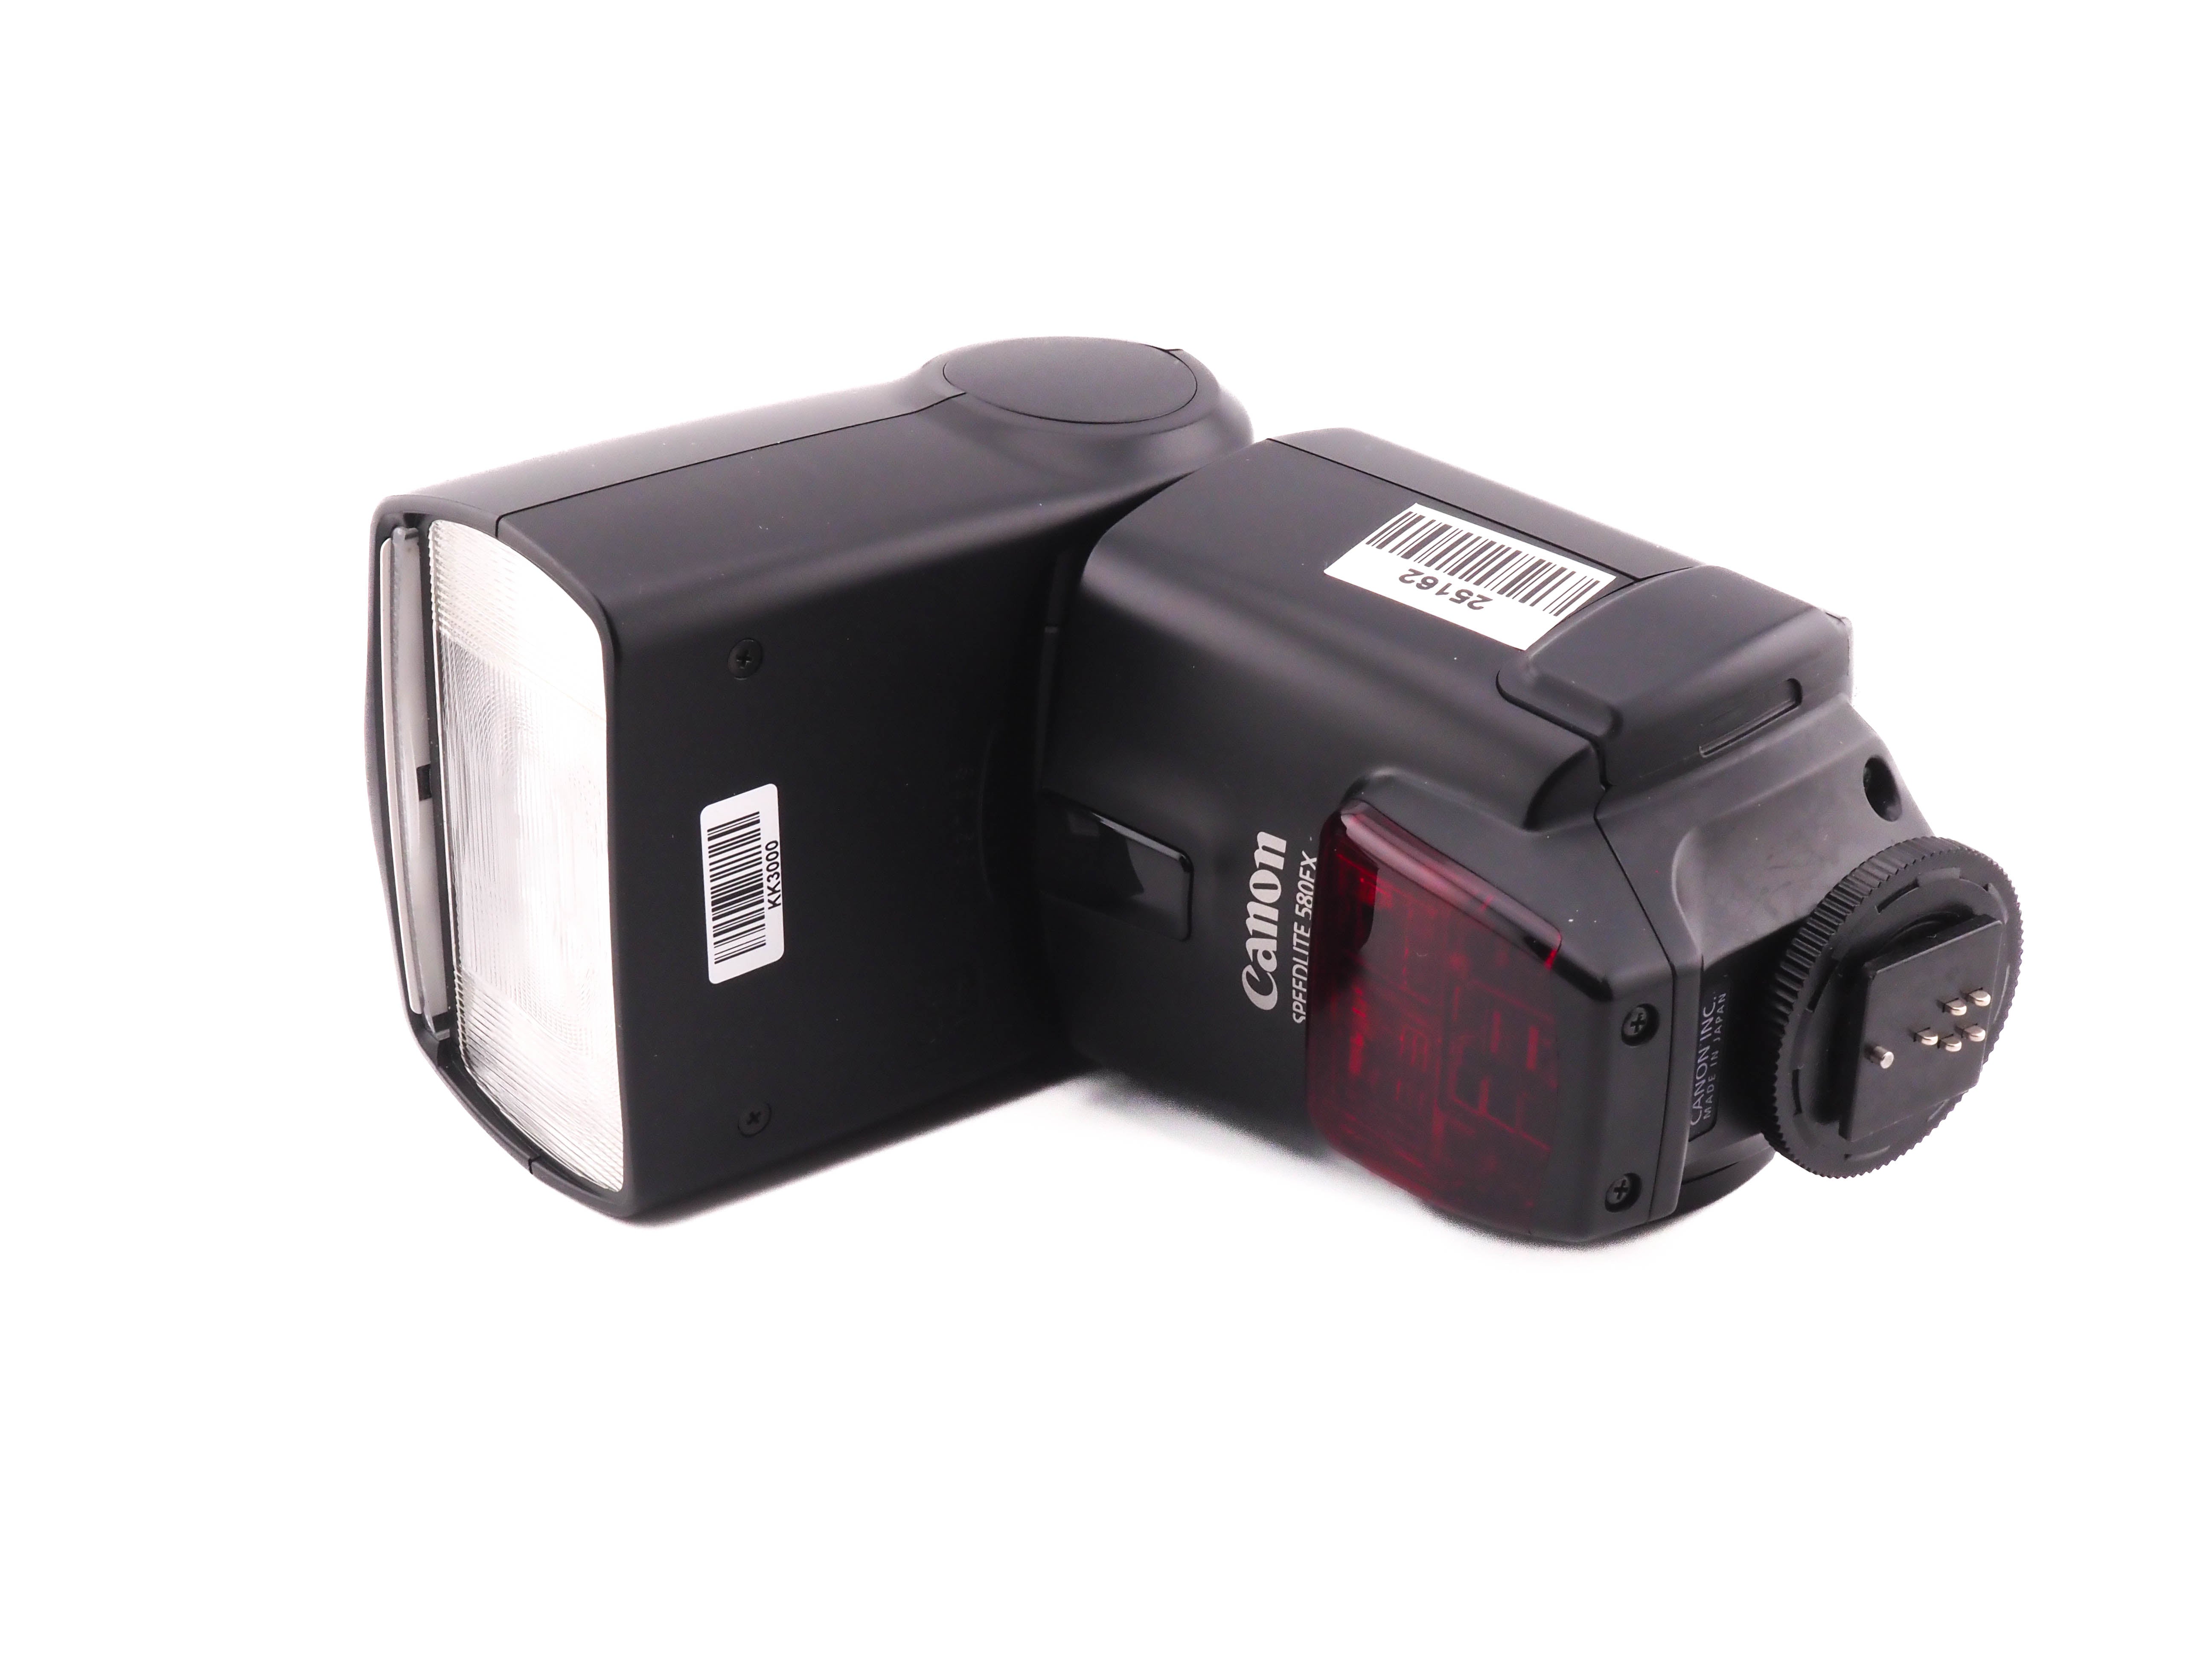  Canon Speedlite 320EX Flash SLR Cameras : On Camera Shoe Mount  Flashes : Electronics